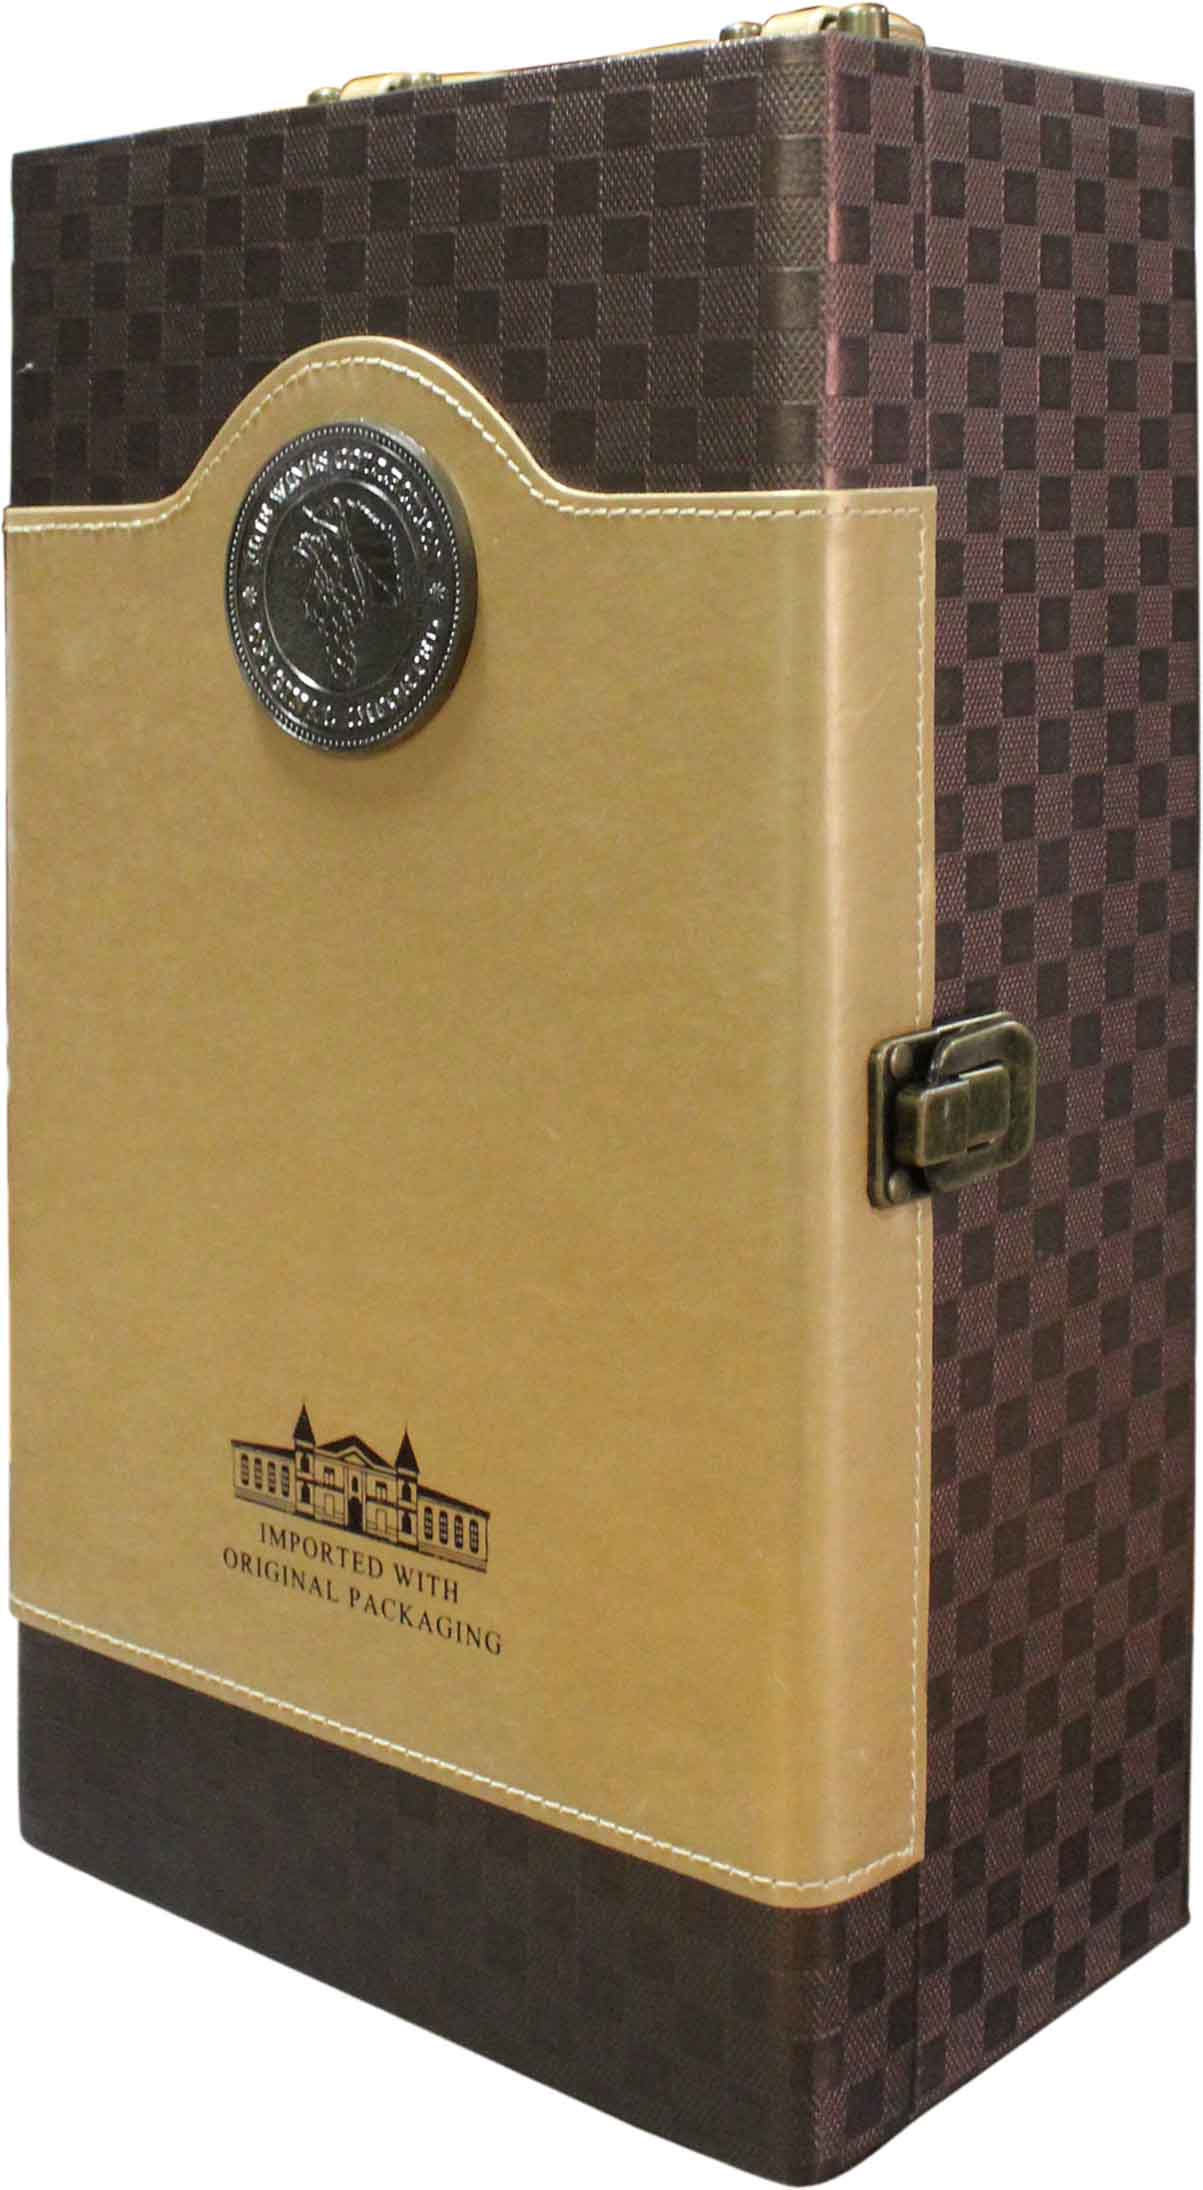 Luxury double leather box 